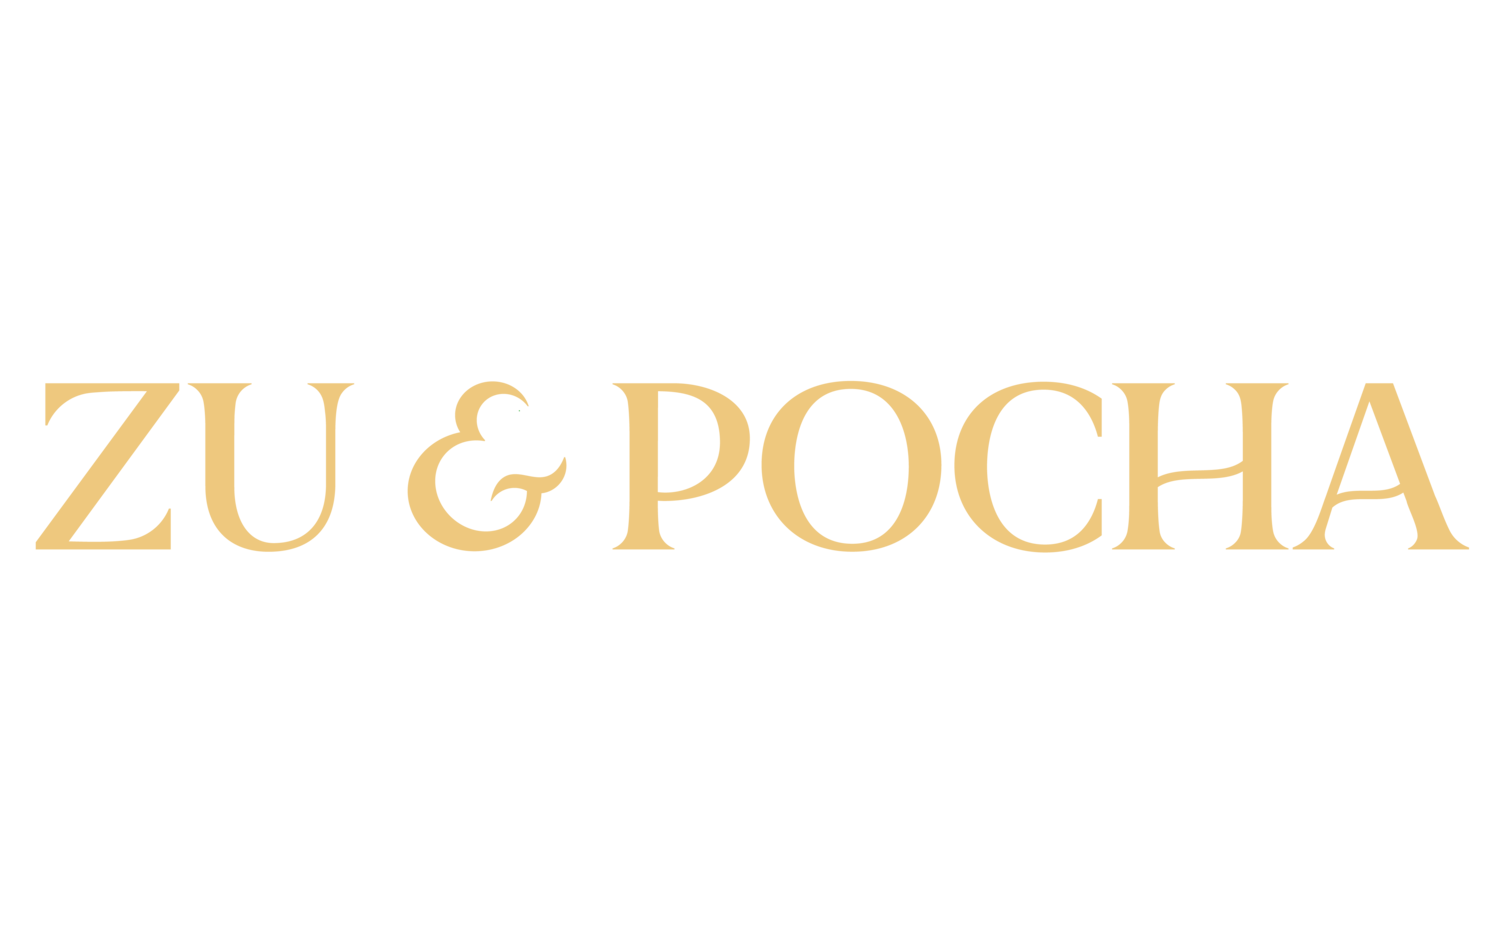 Zu & Pocha